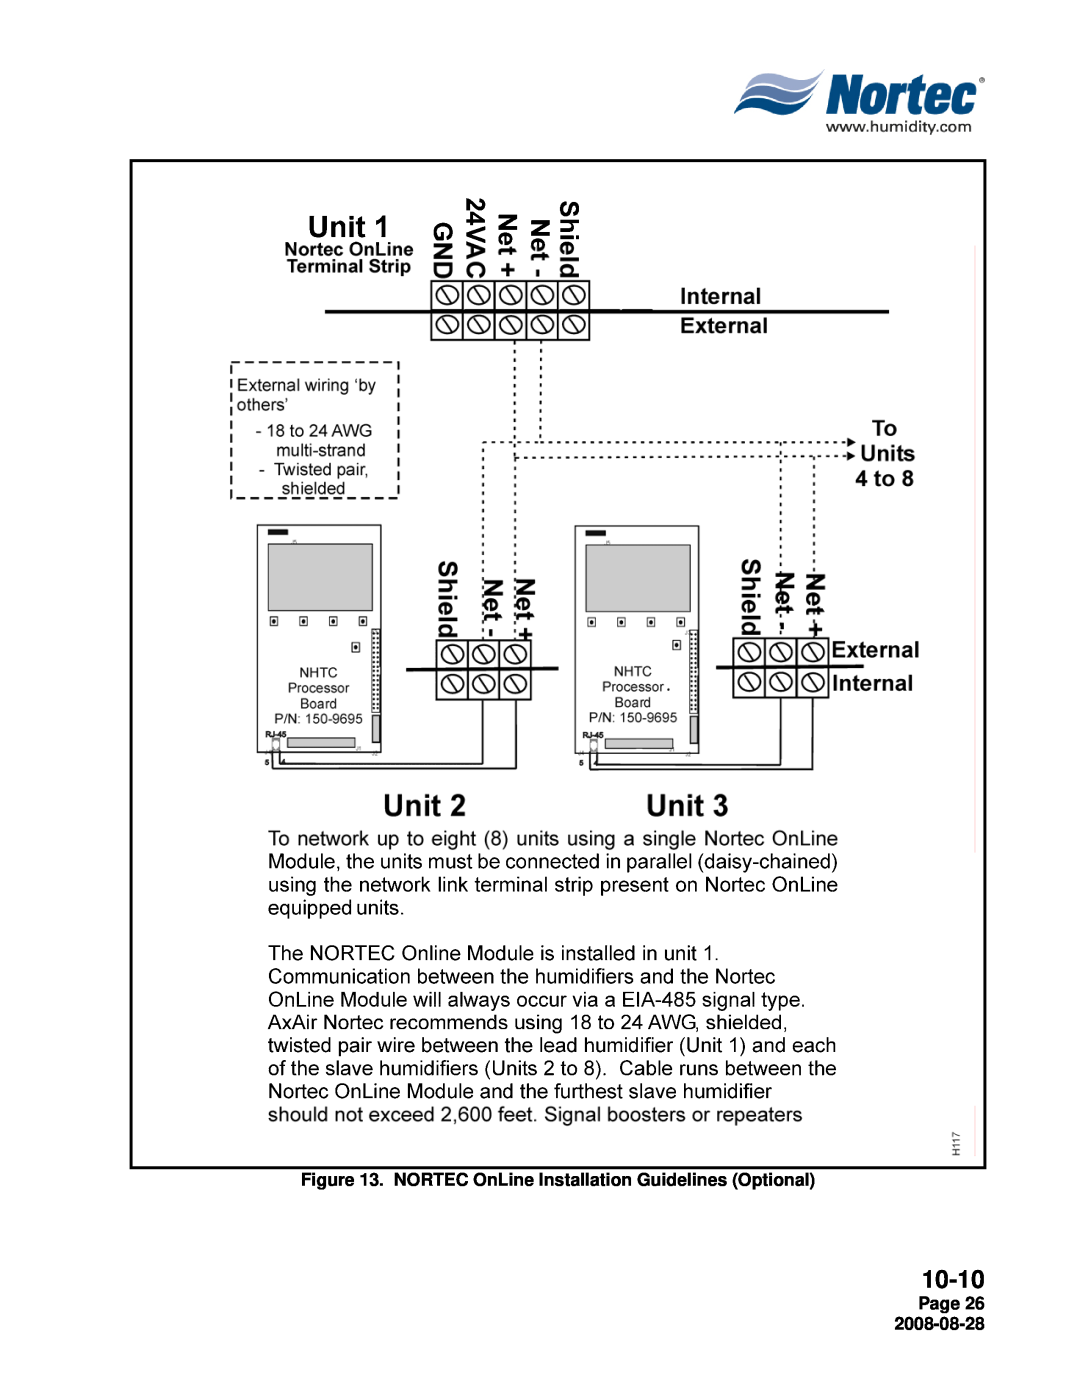 Nortec NH Series installation manual 10-10, Page 26 